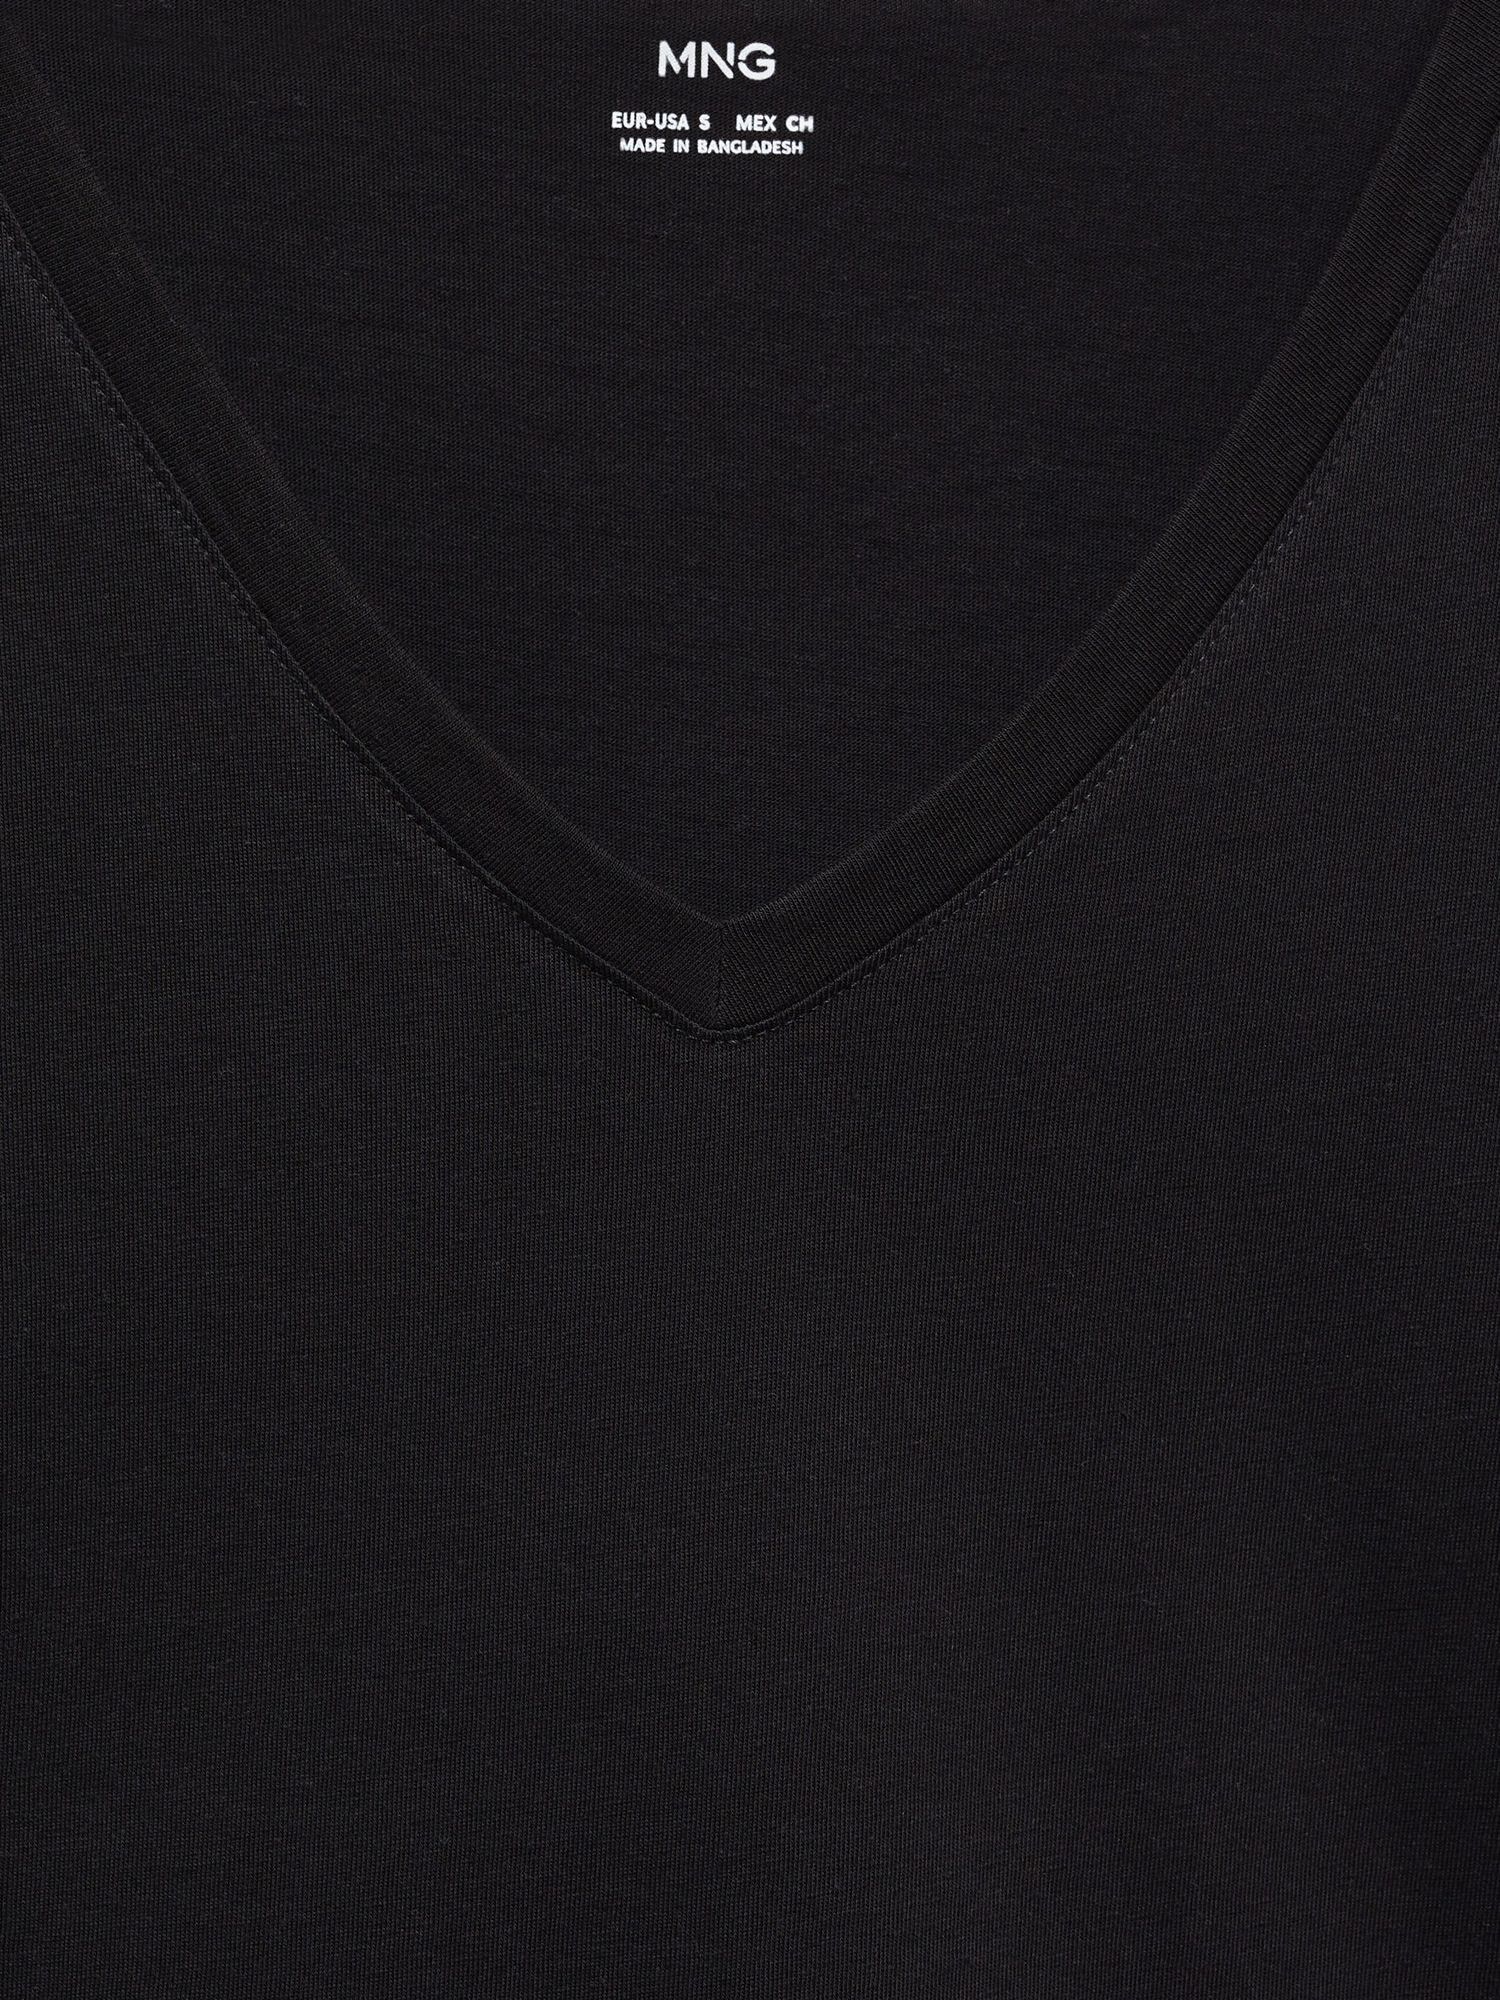 Mango Chalapi Cotton V-Neck T-Shirt, Black, 5XL